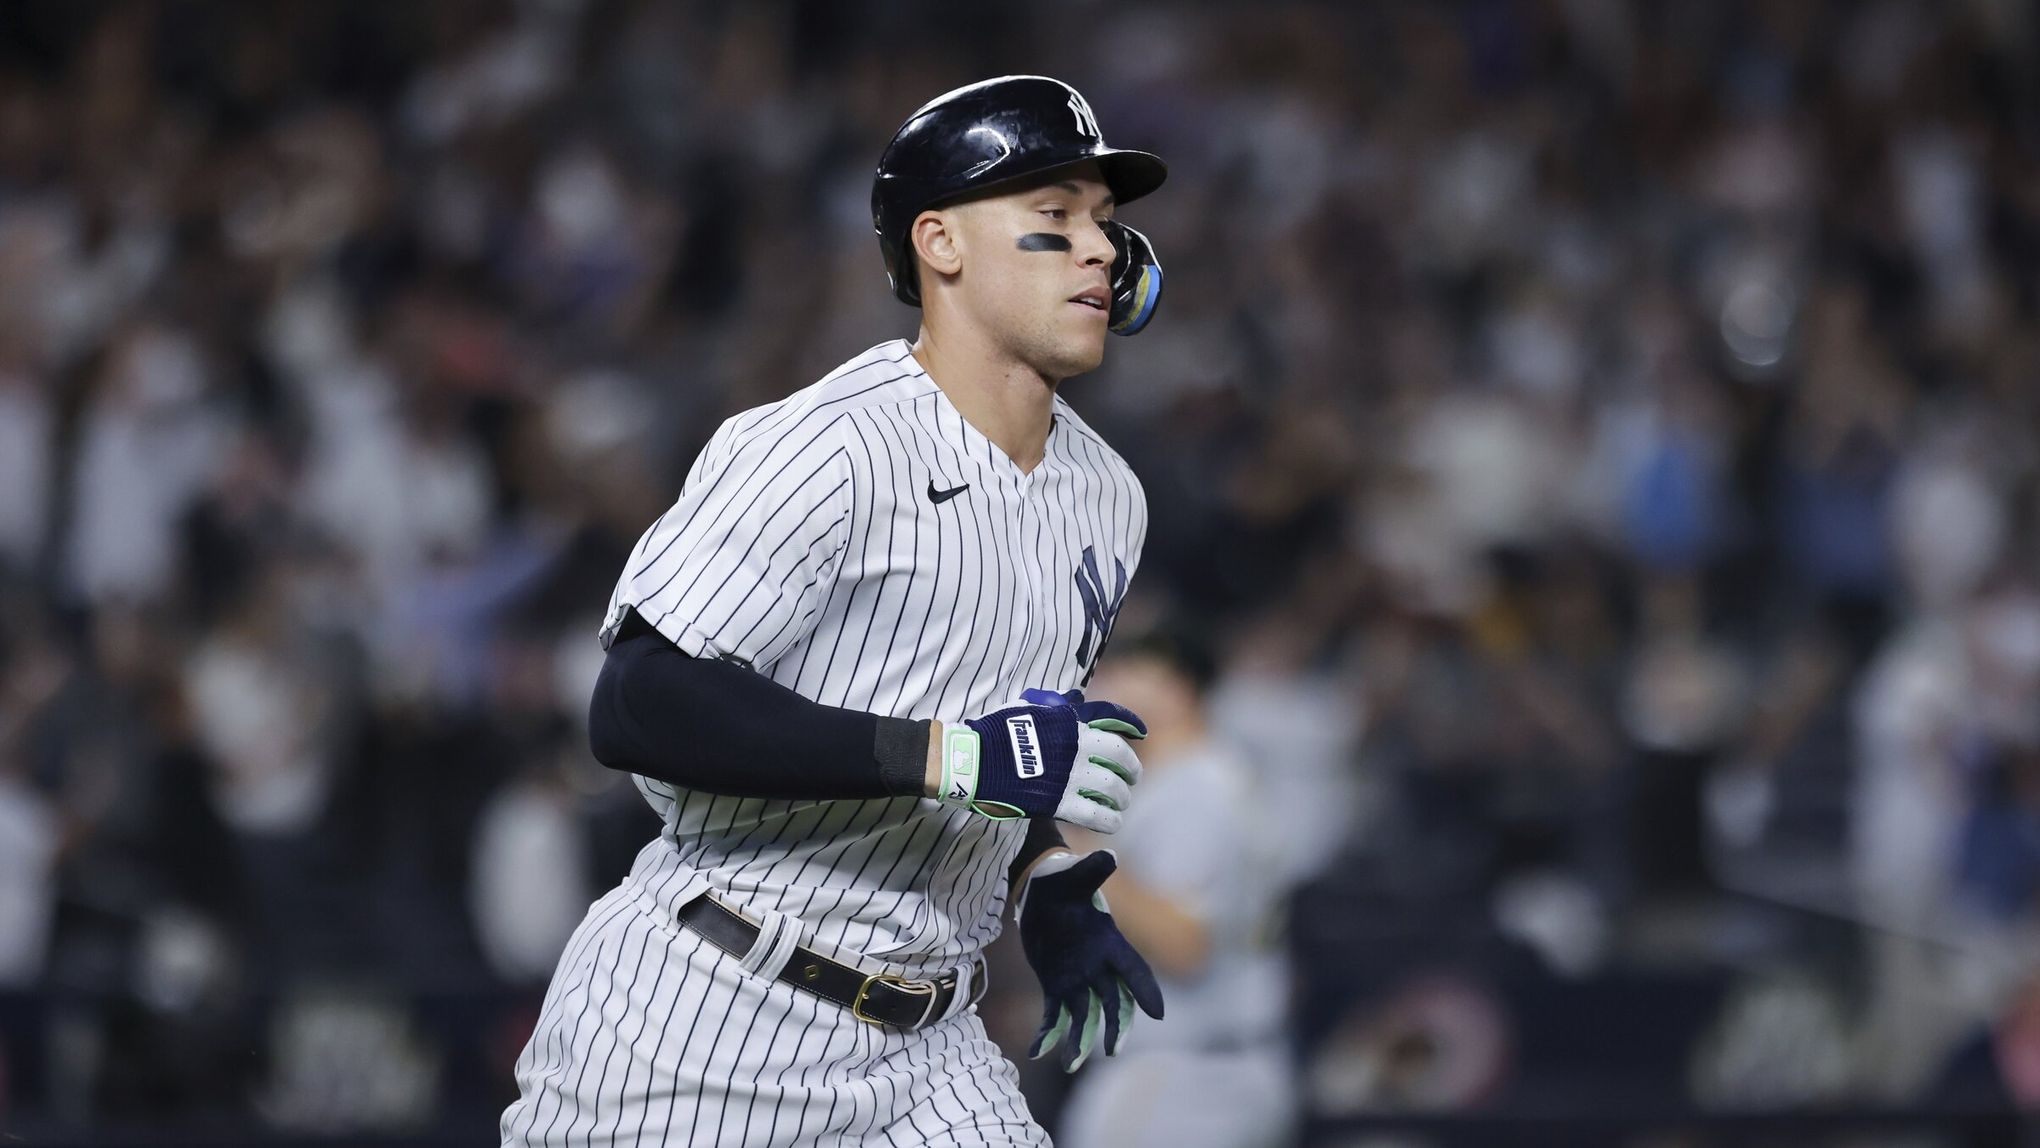 Yankees' Aaron Judge on home run king: 'Seventy-three is the